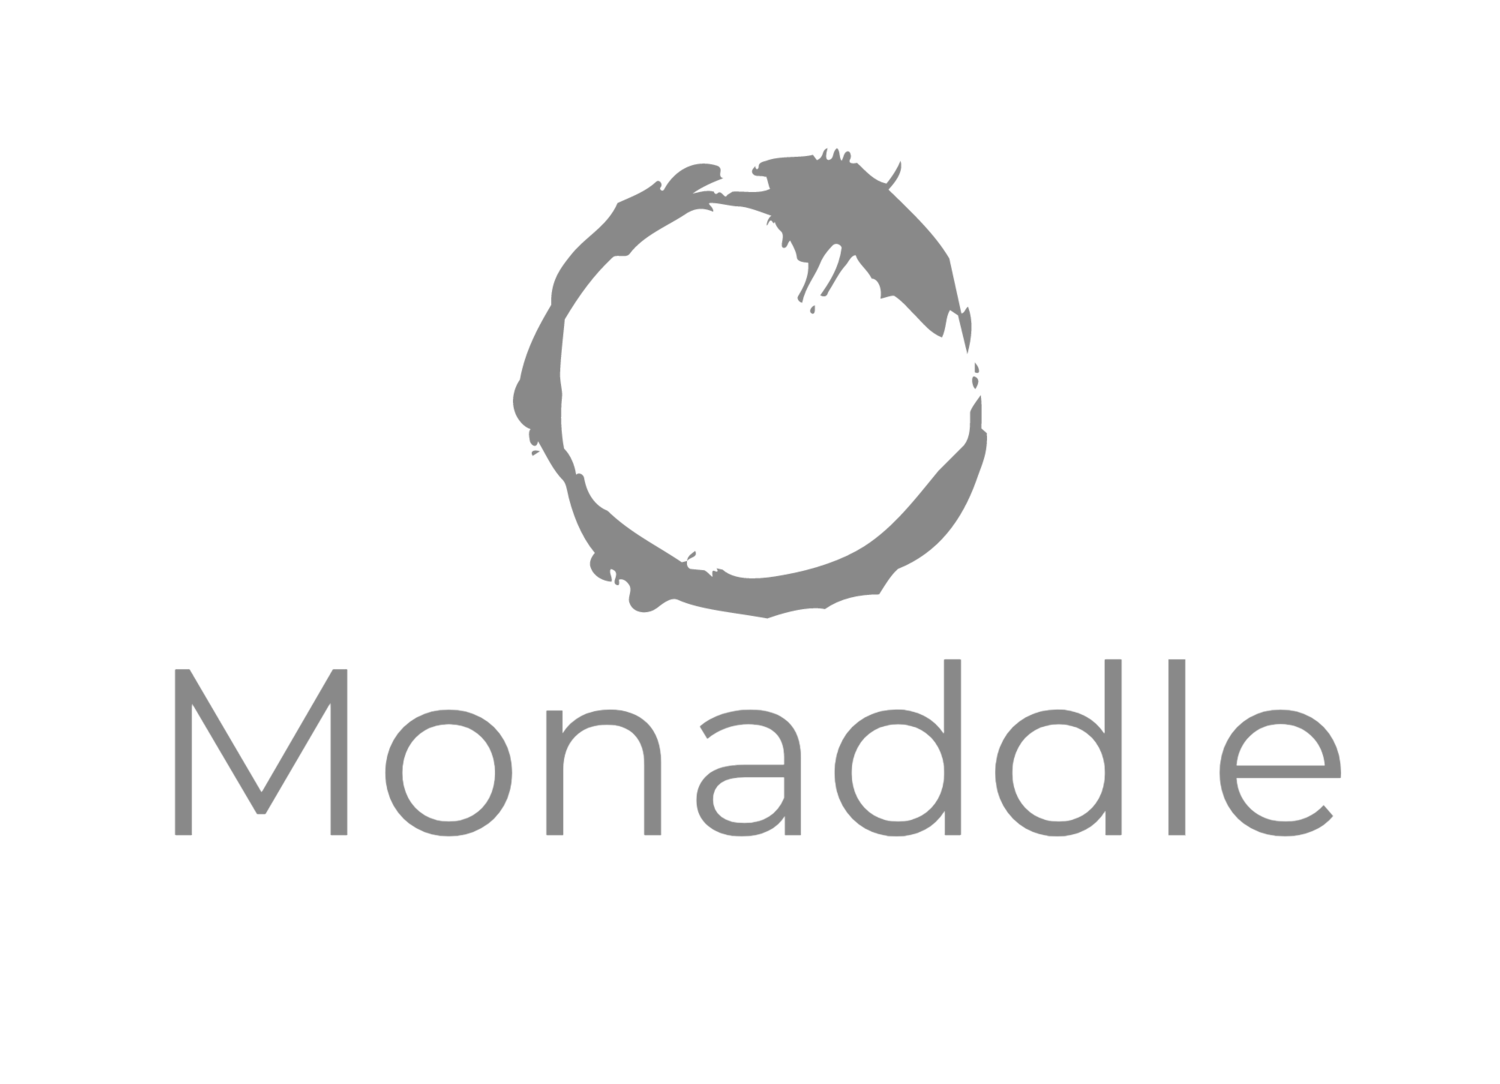 Monaddle